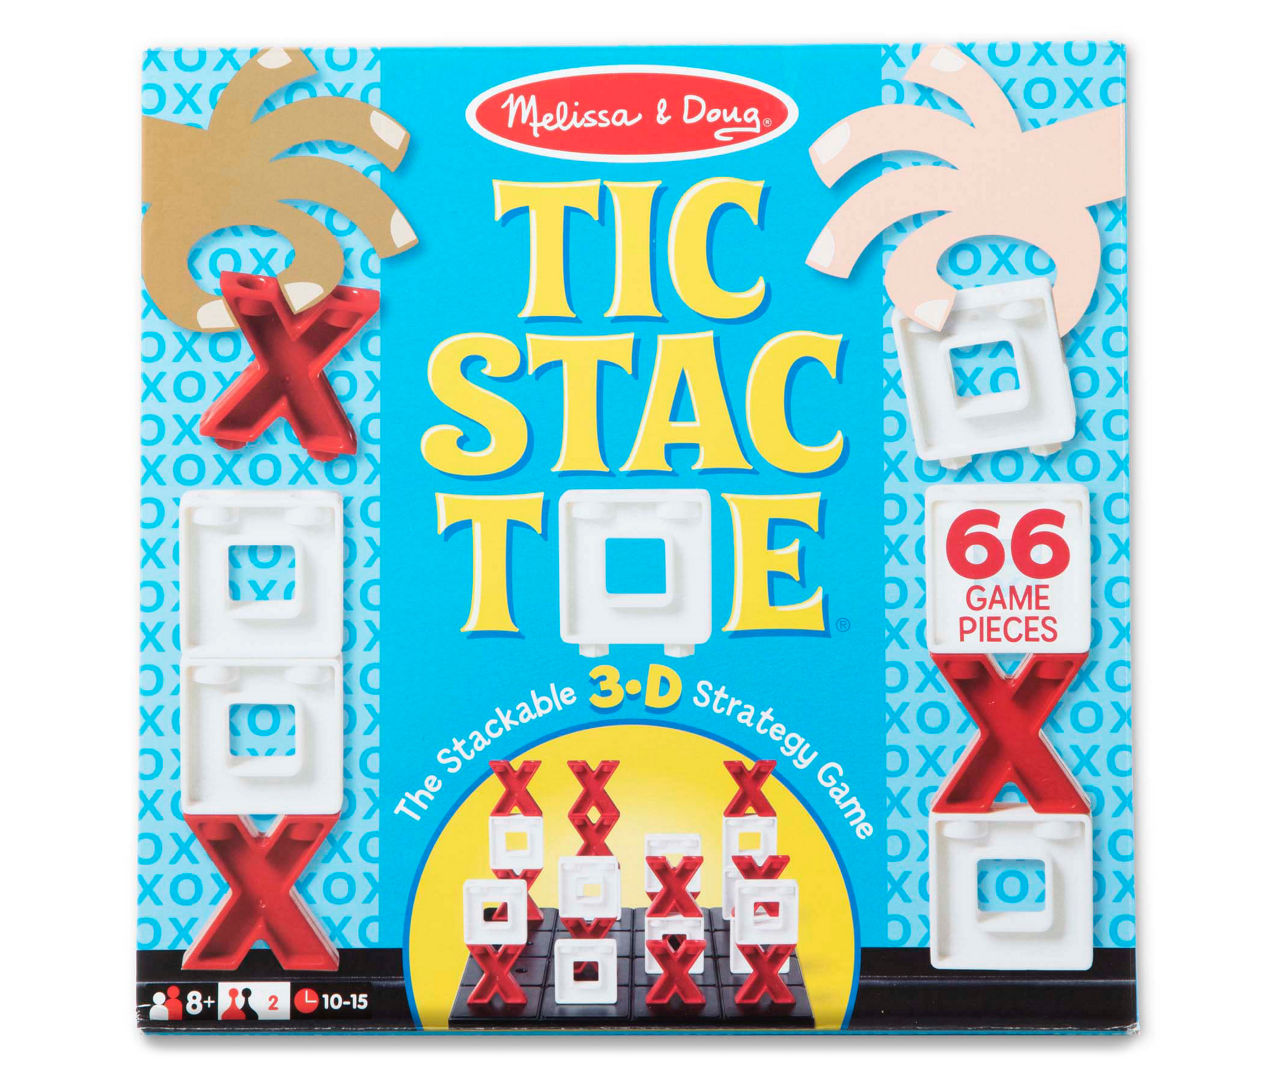 1pc Tic Tac Toe Strategy Board Game